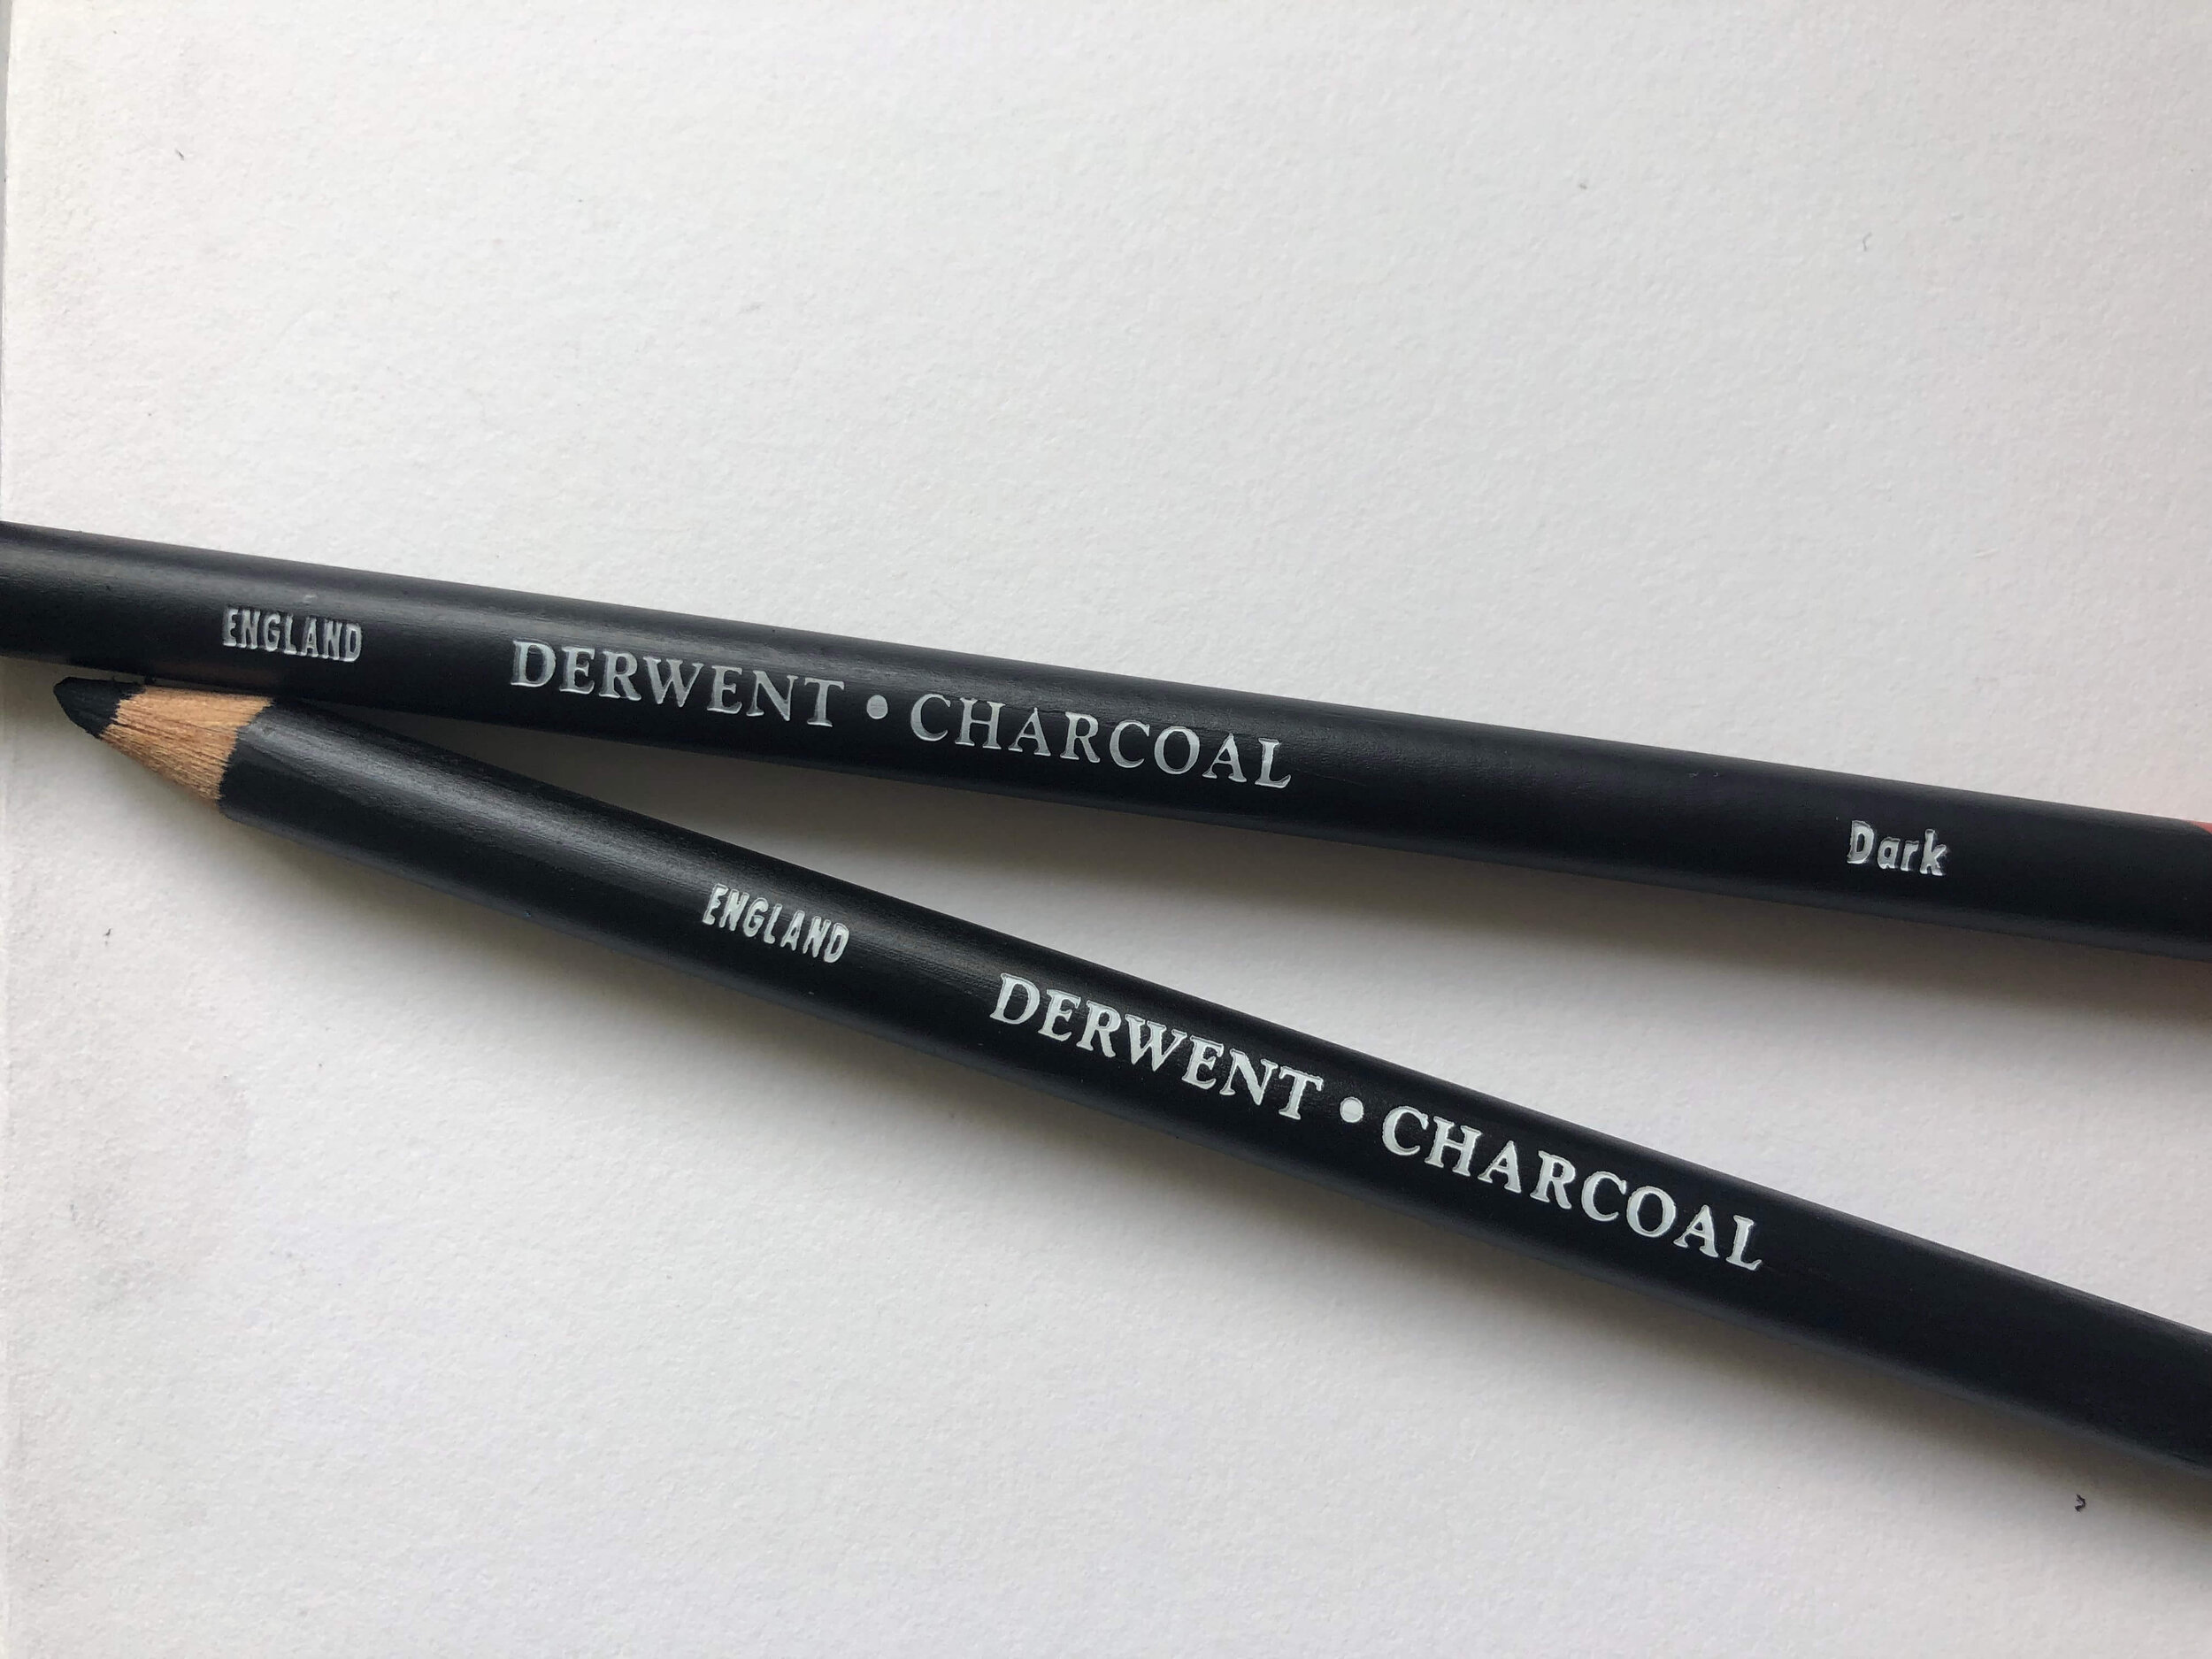 Derwent Professional Charcoal Pencils in Light, Medium or Dark